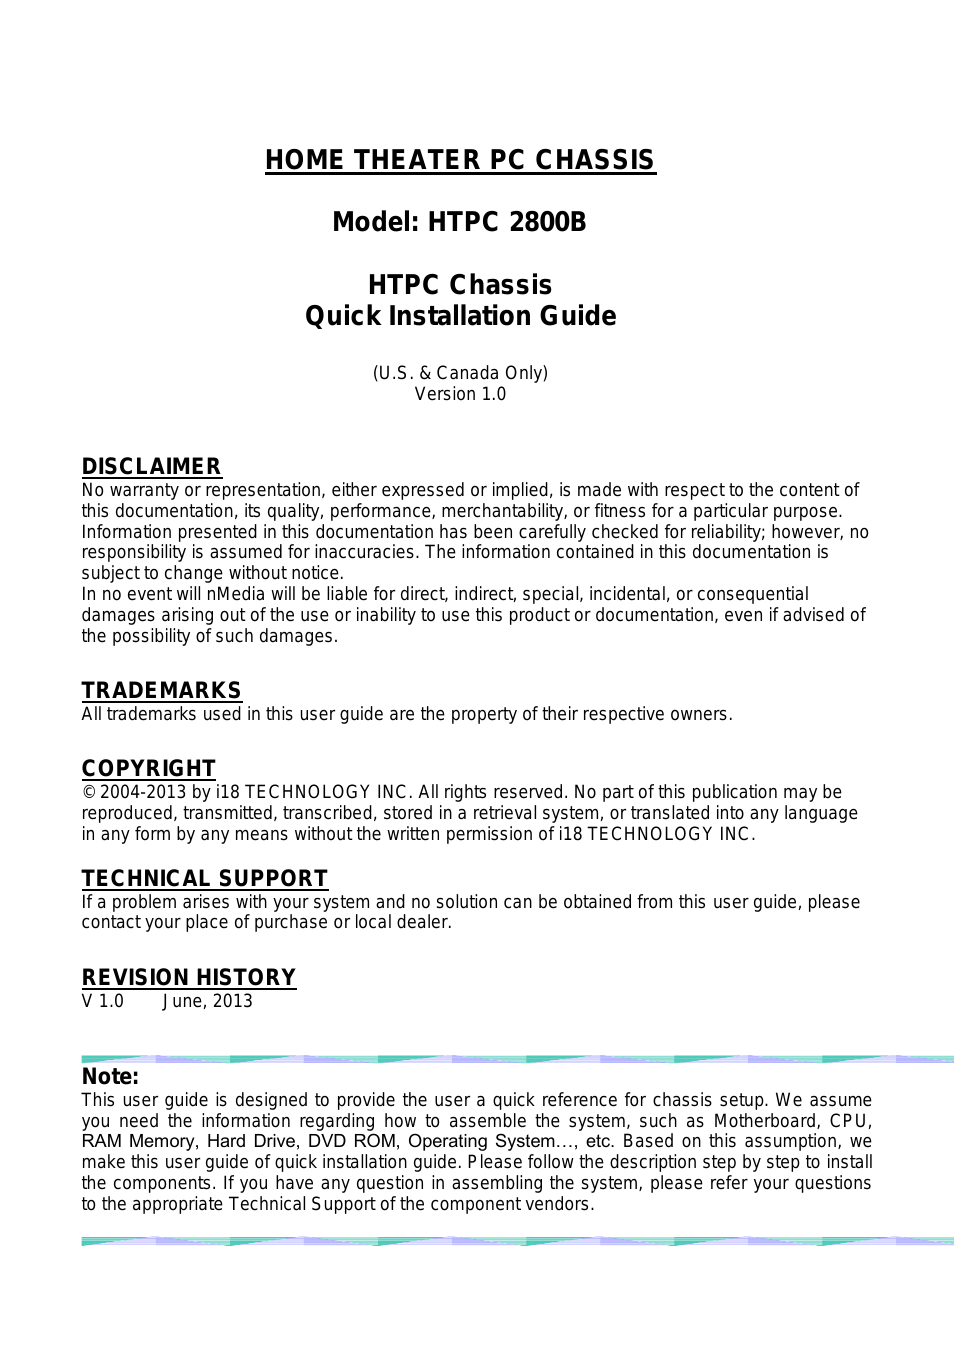 HTPC 2800B